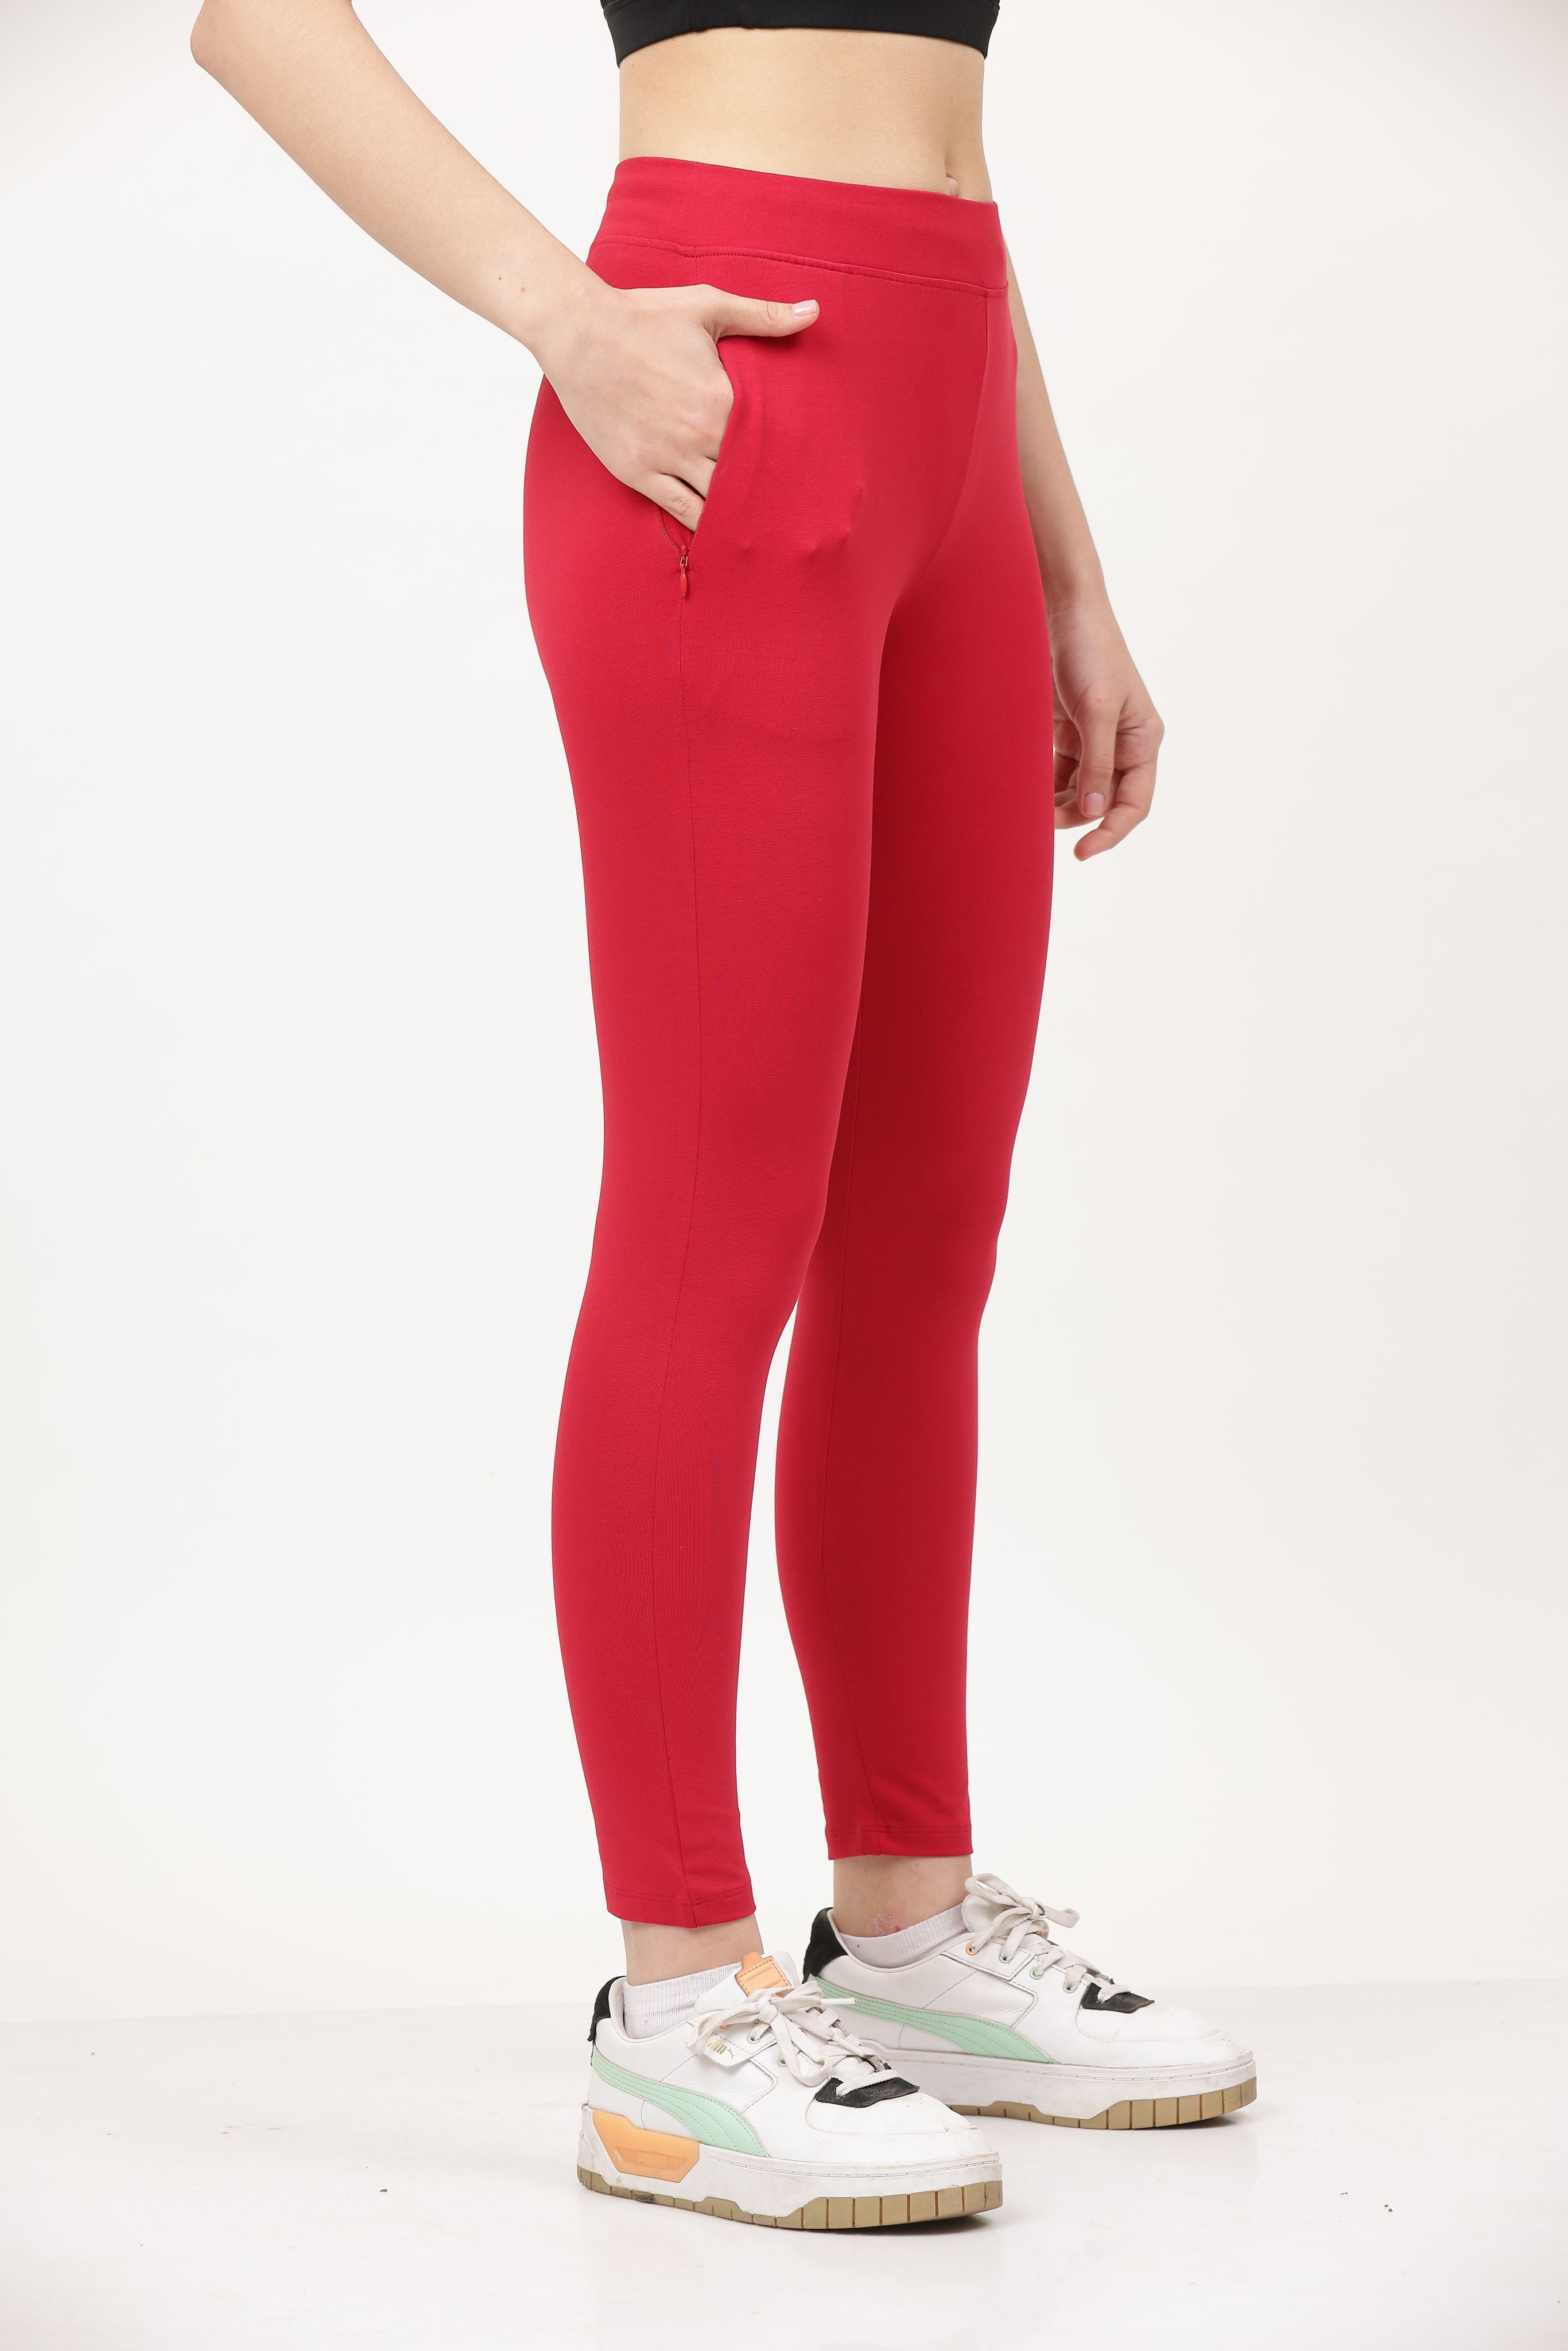 Women Yoga Pants Style No-3350(3P)